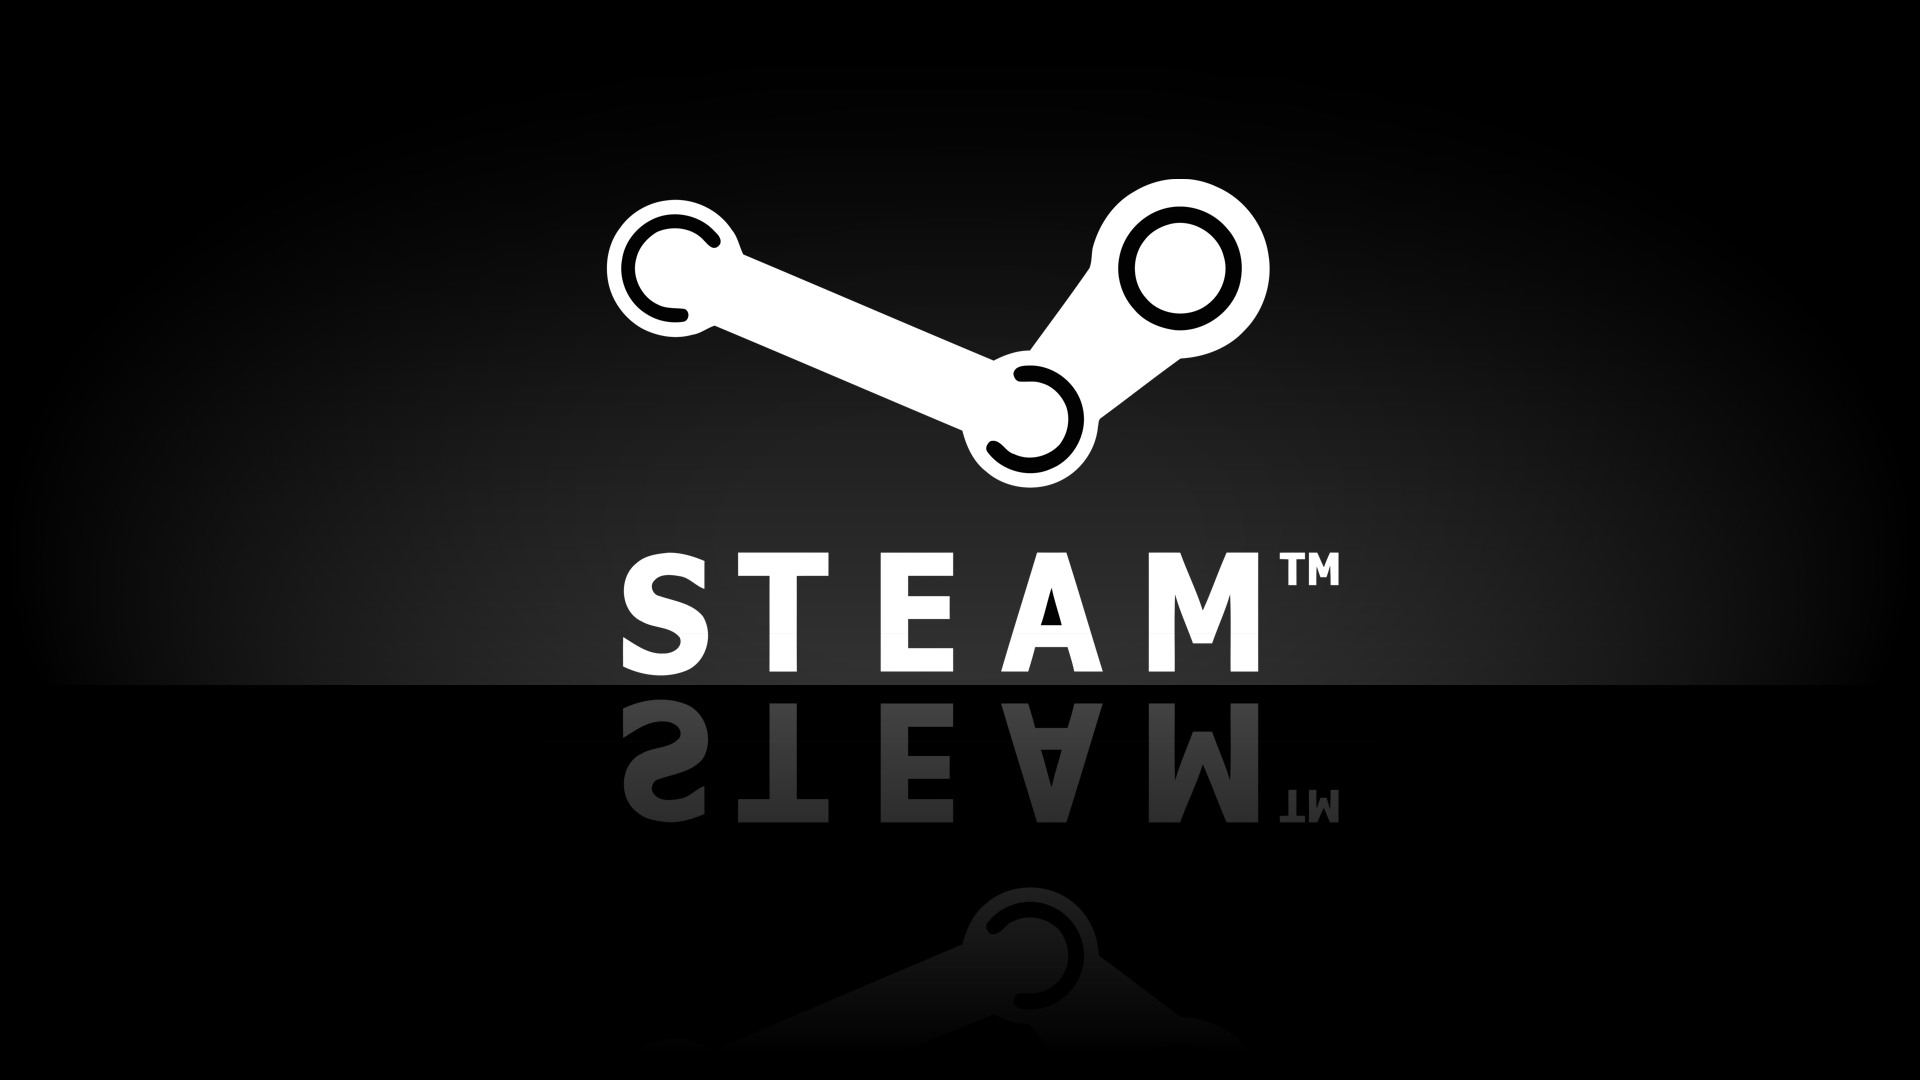 Steam Logo Wallpaper Image Size